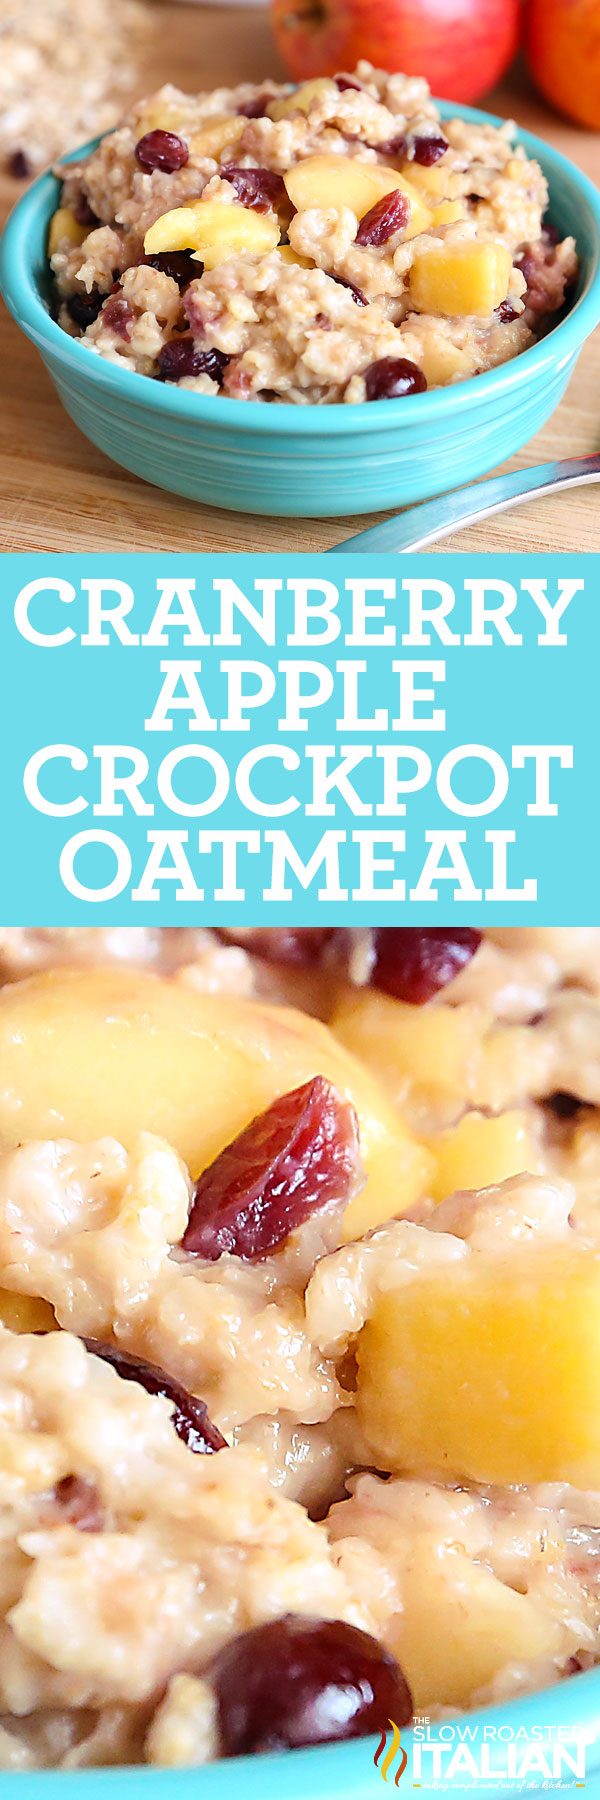 cranberry-apple-crockpot-oatmeal-pin-8446375